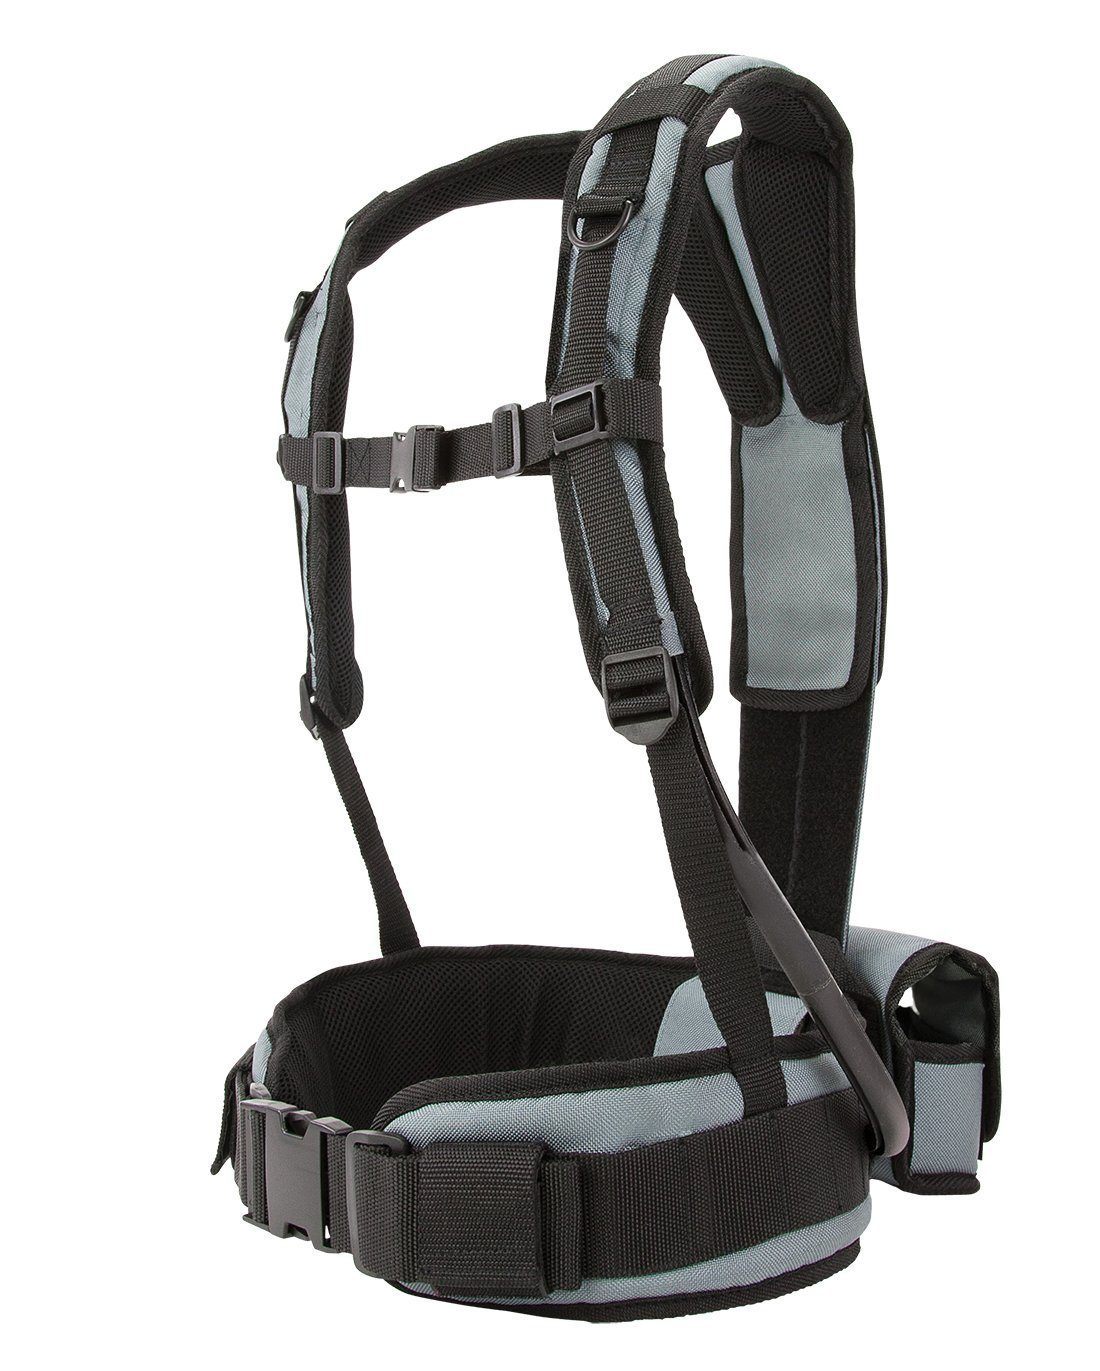 Minealb Pro Swing 45 metal detecting harness